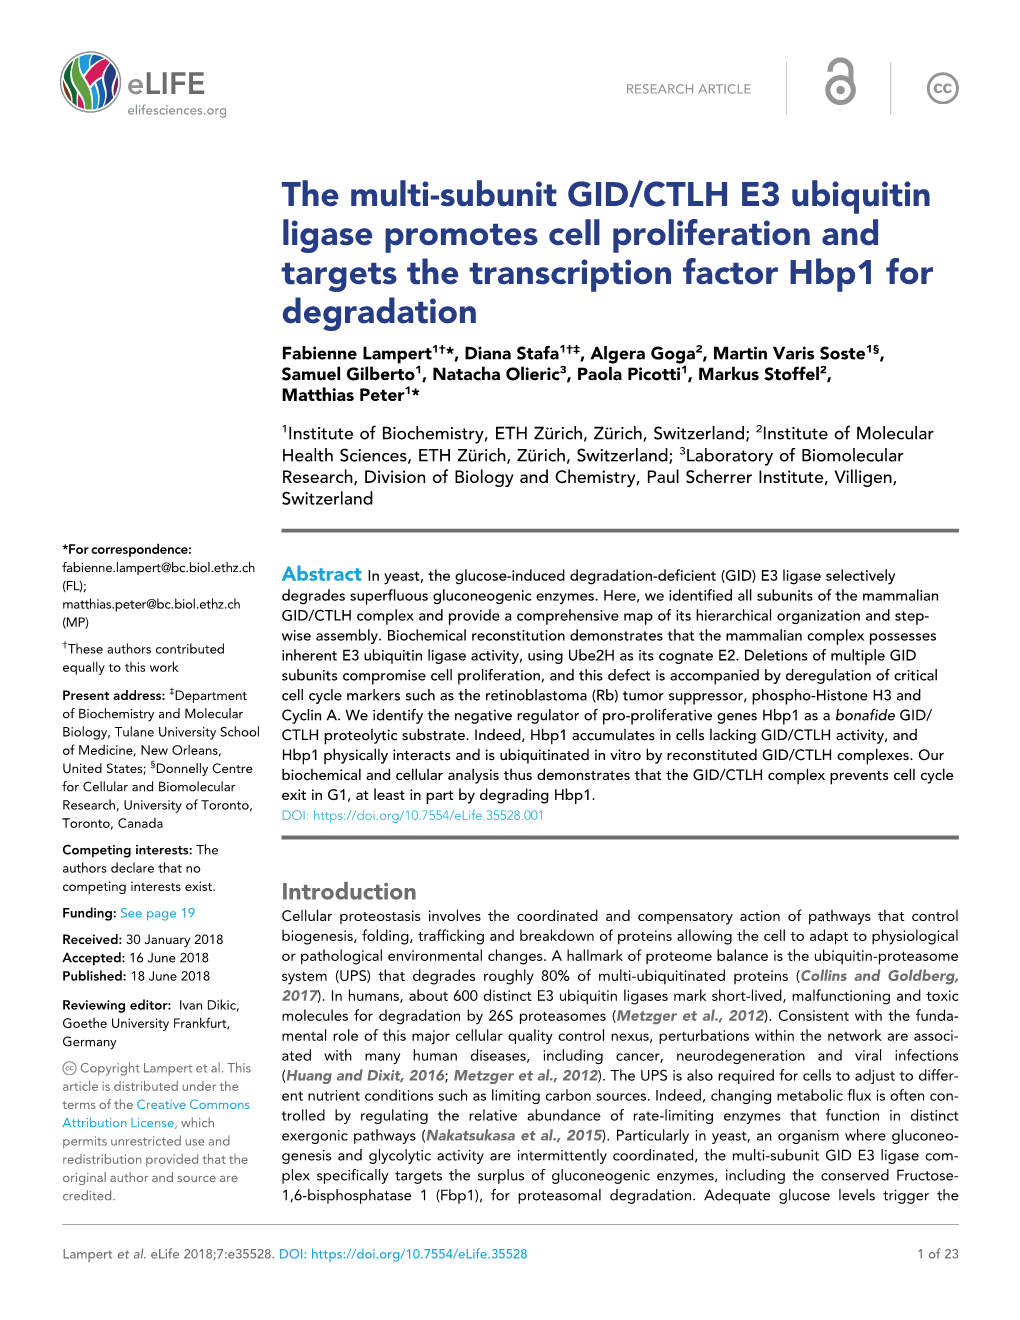 The Multi-Subunit GID/CTLH E3 Ubiquitin Ligase